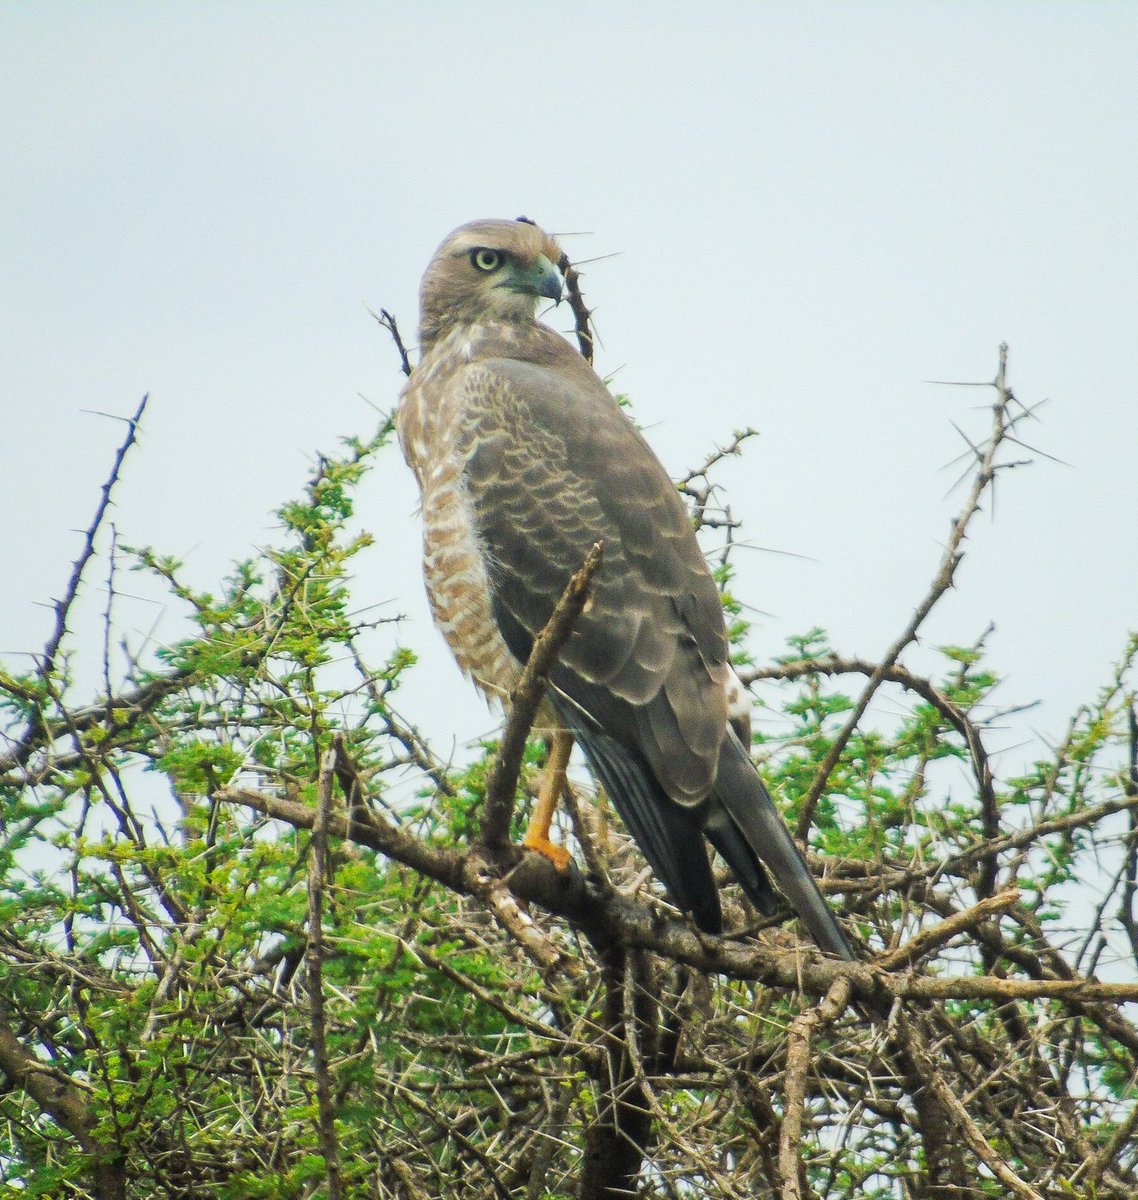 Juvenile eastern chanting goshawk.
#birding #birdphotography #birdwatching #birdlovers #raptor #nature #wildlifephotography #amboselinationalpark #kenya #tembeakenya #magicalkenya.